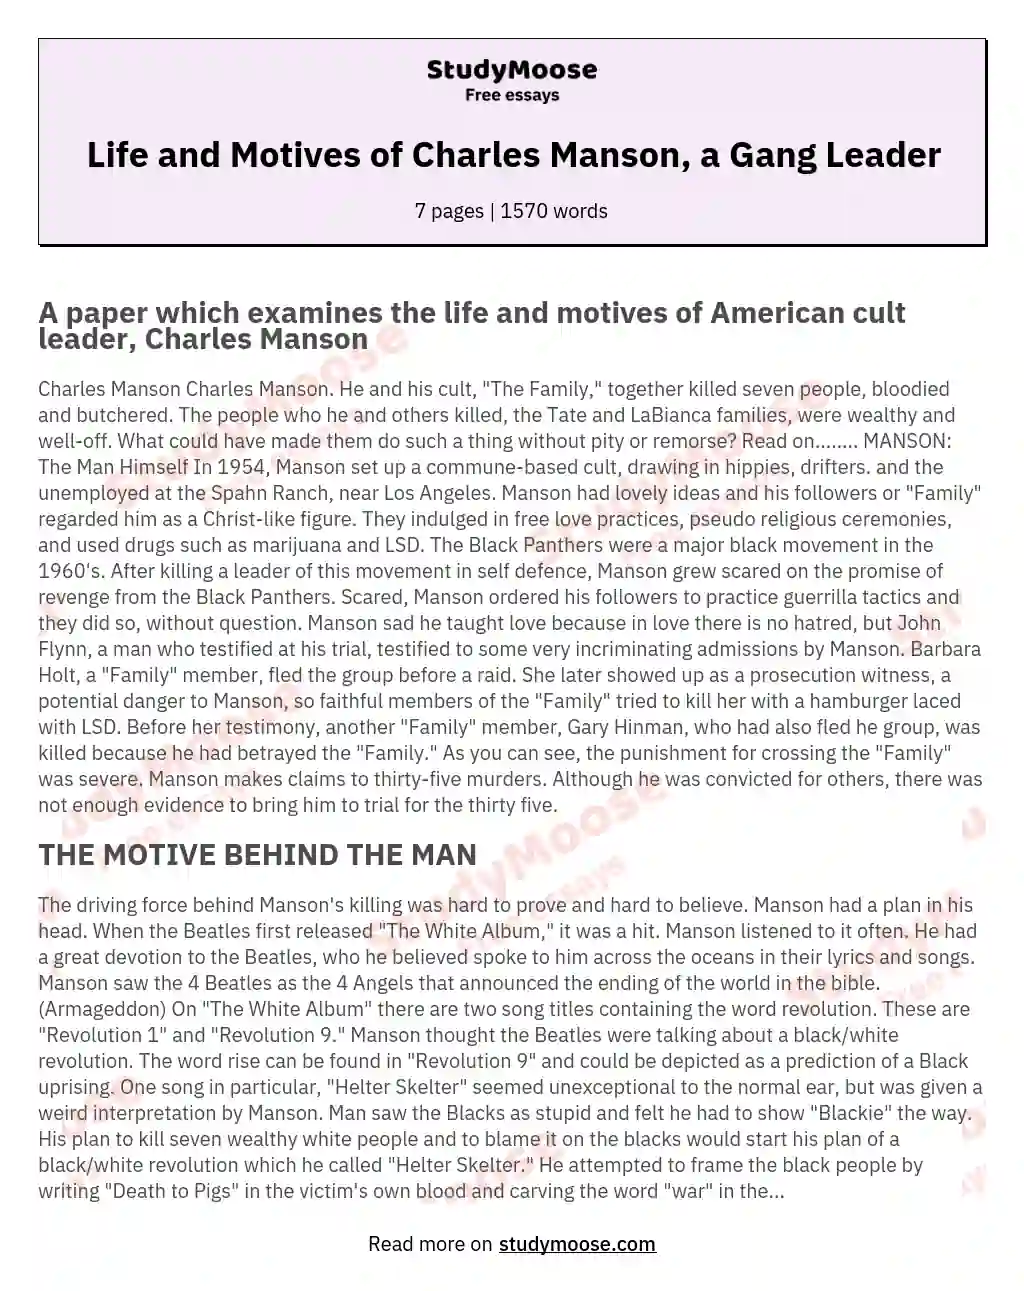 Life and Motives of Charles Manson, a Gang Leader